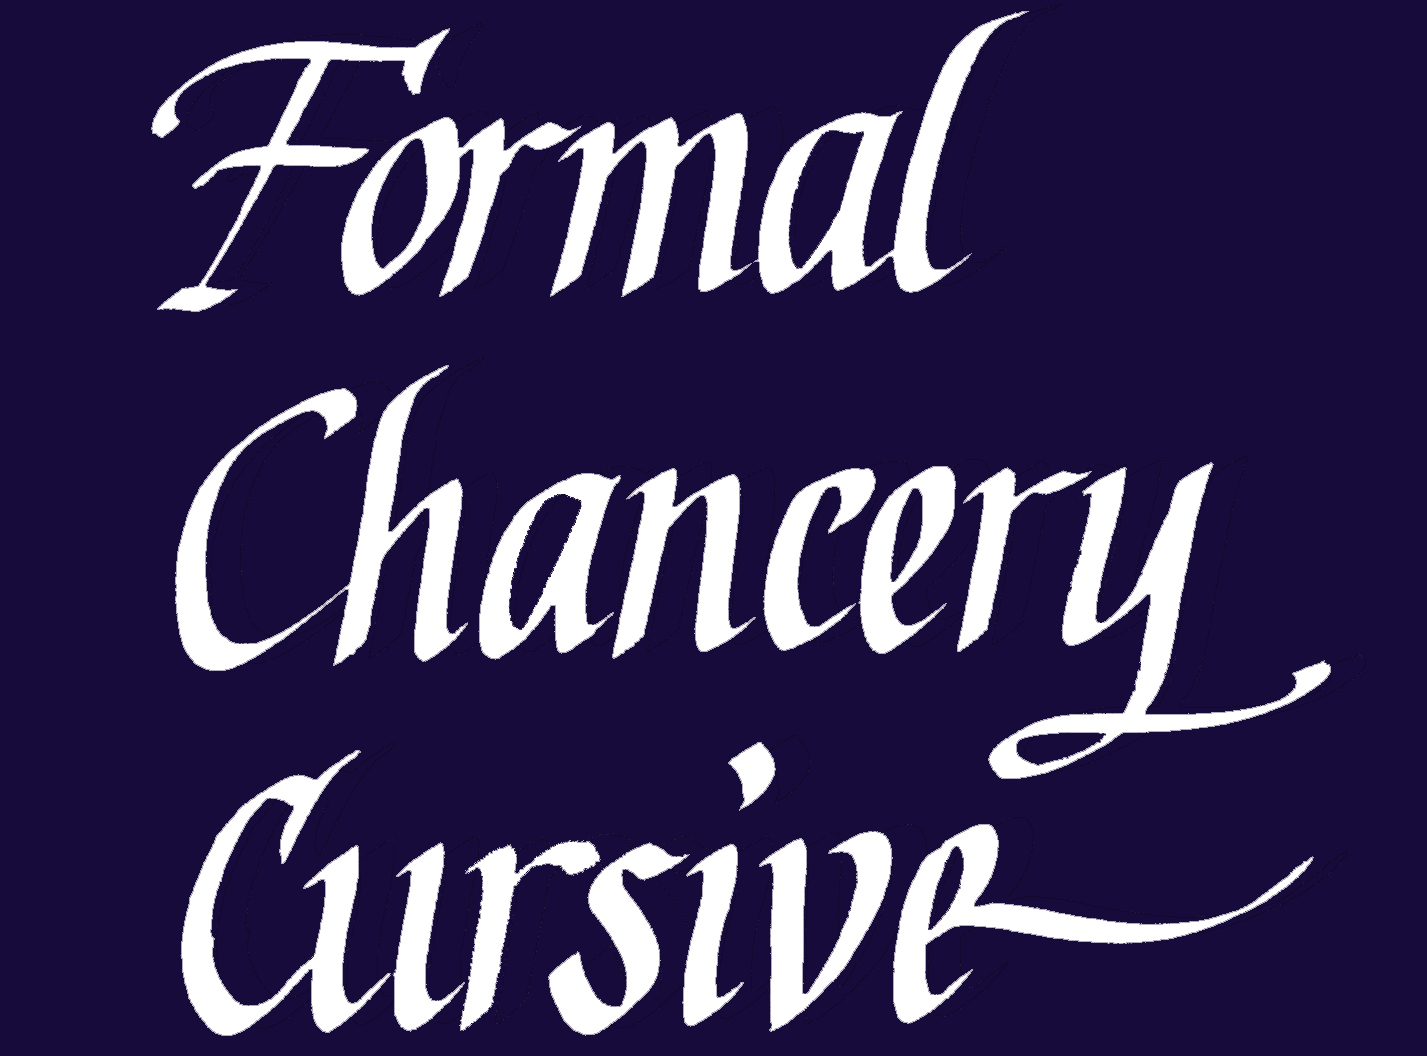 Formal Chancery